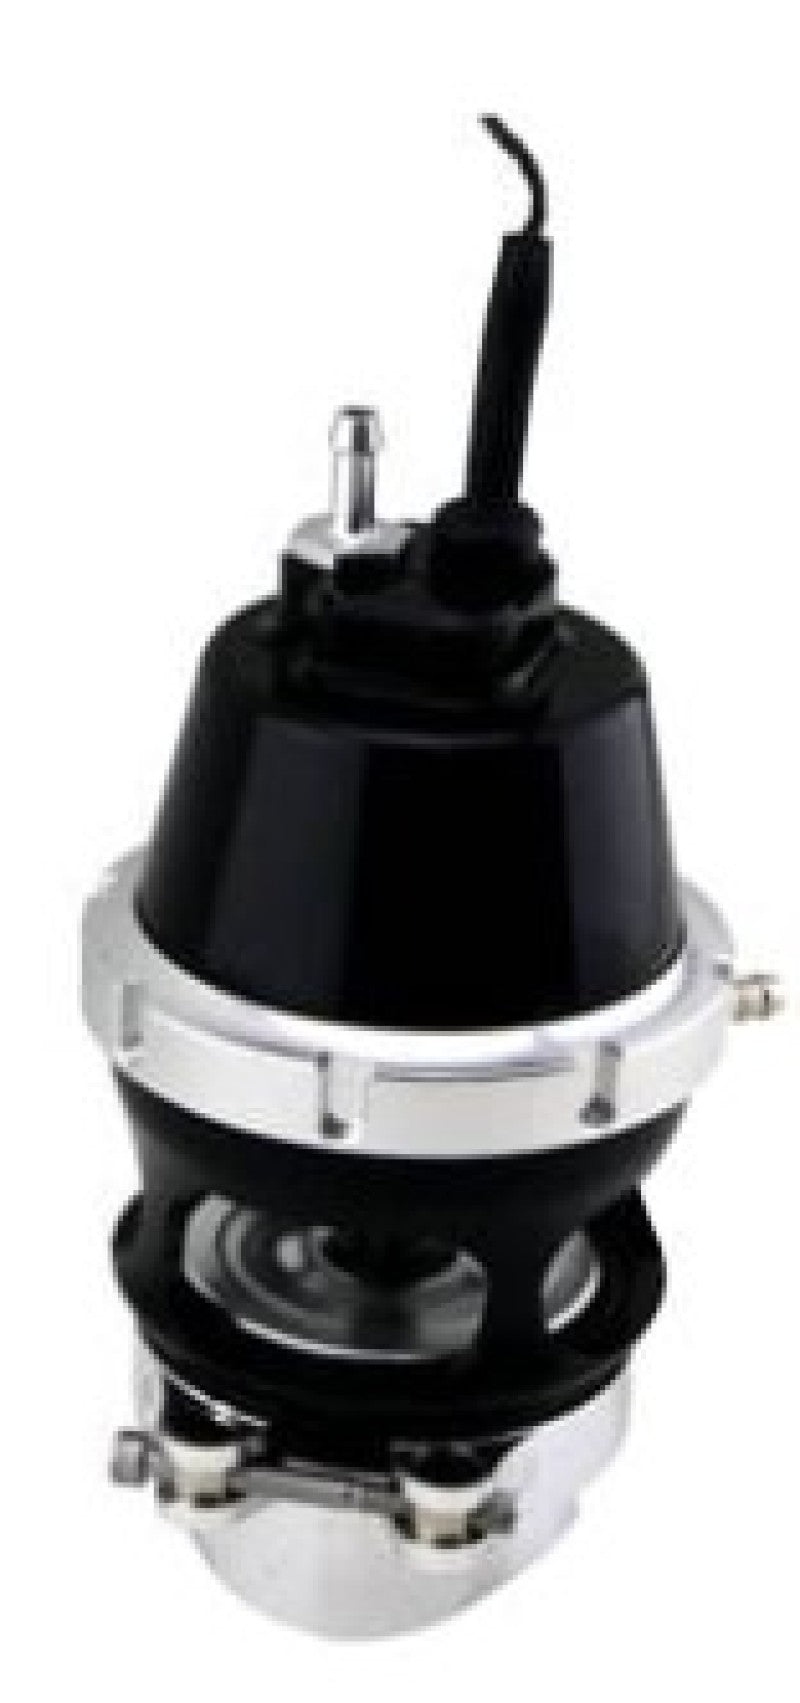 Turbosmart BOV Power Port w/ Sensor Cap - Black